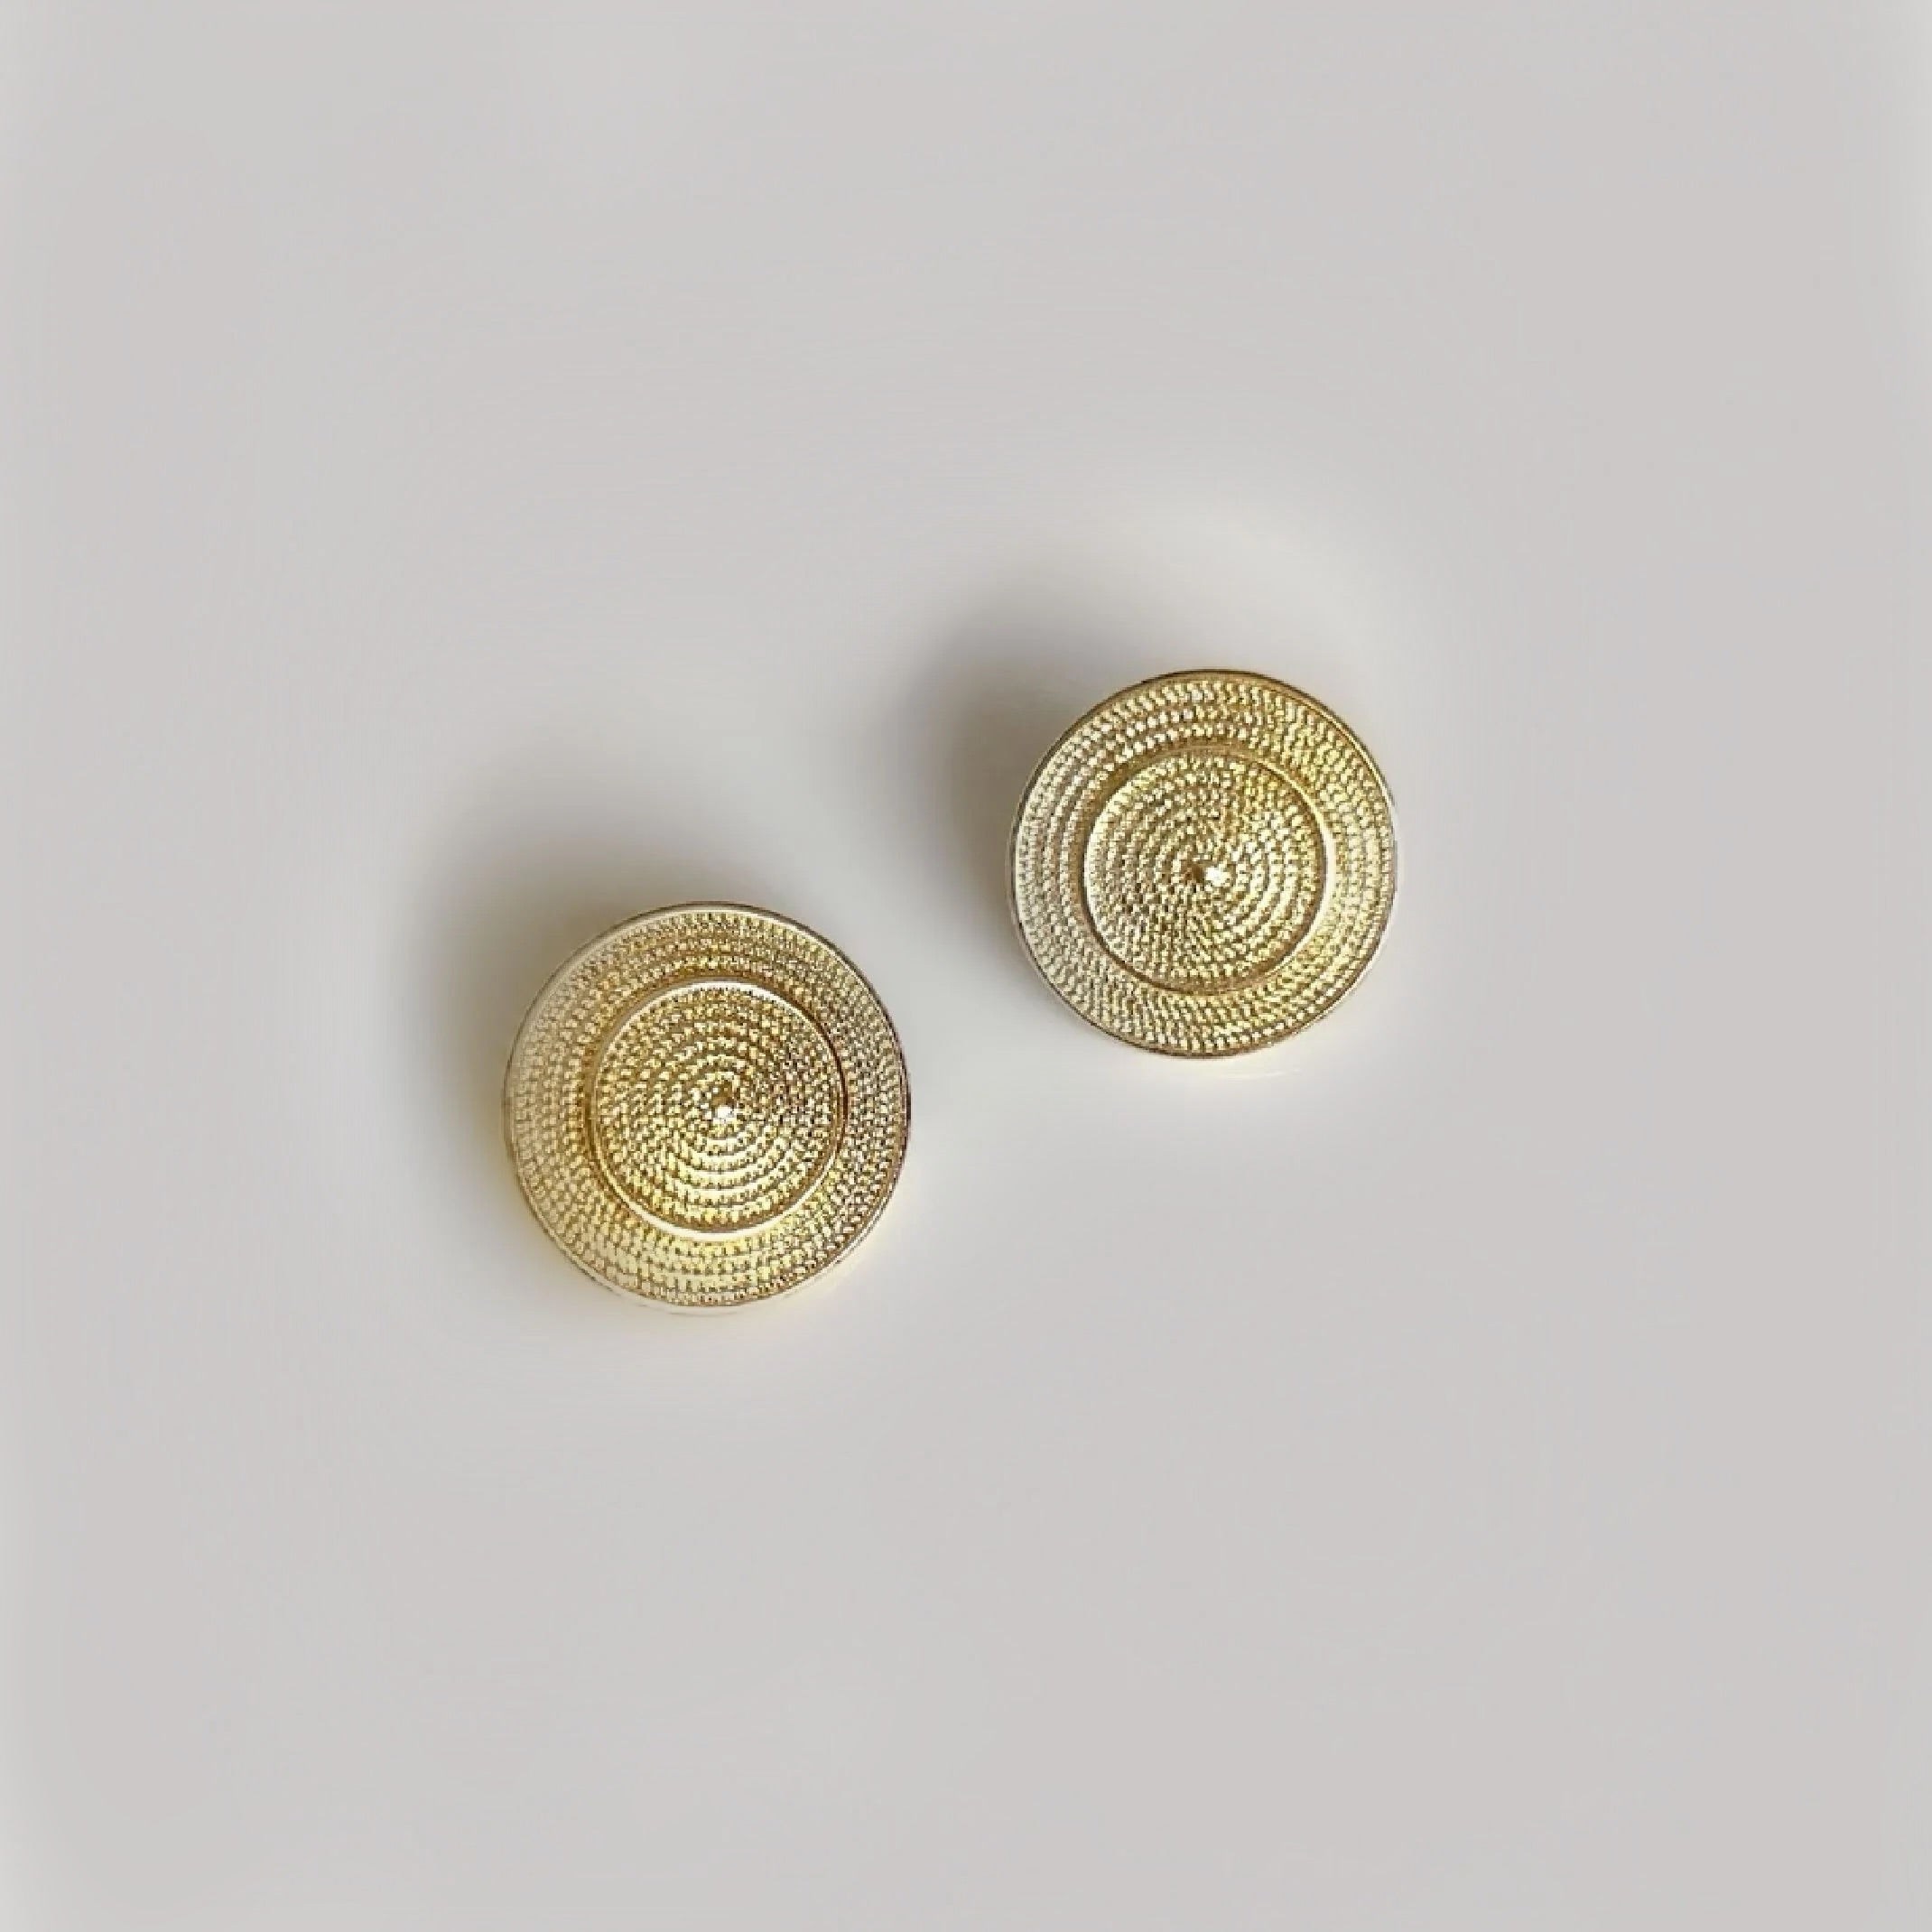 Gold button earrings 